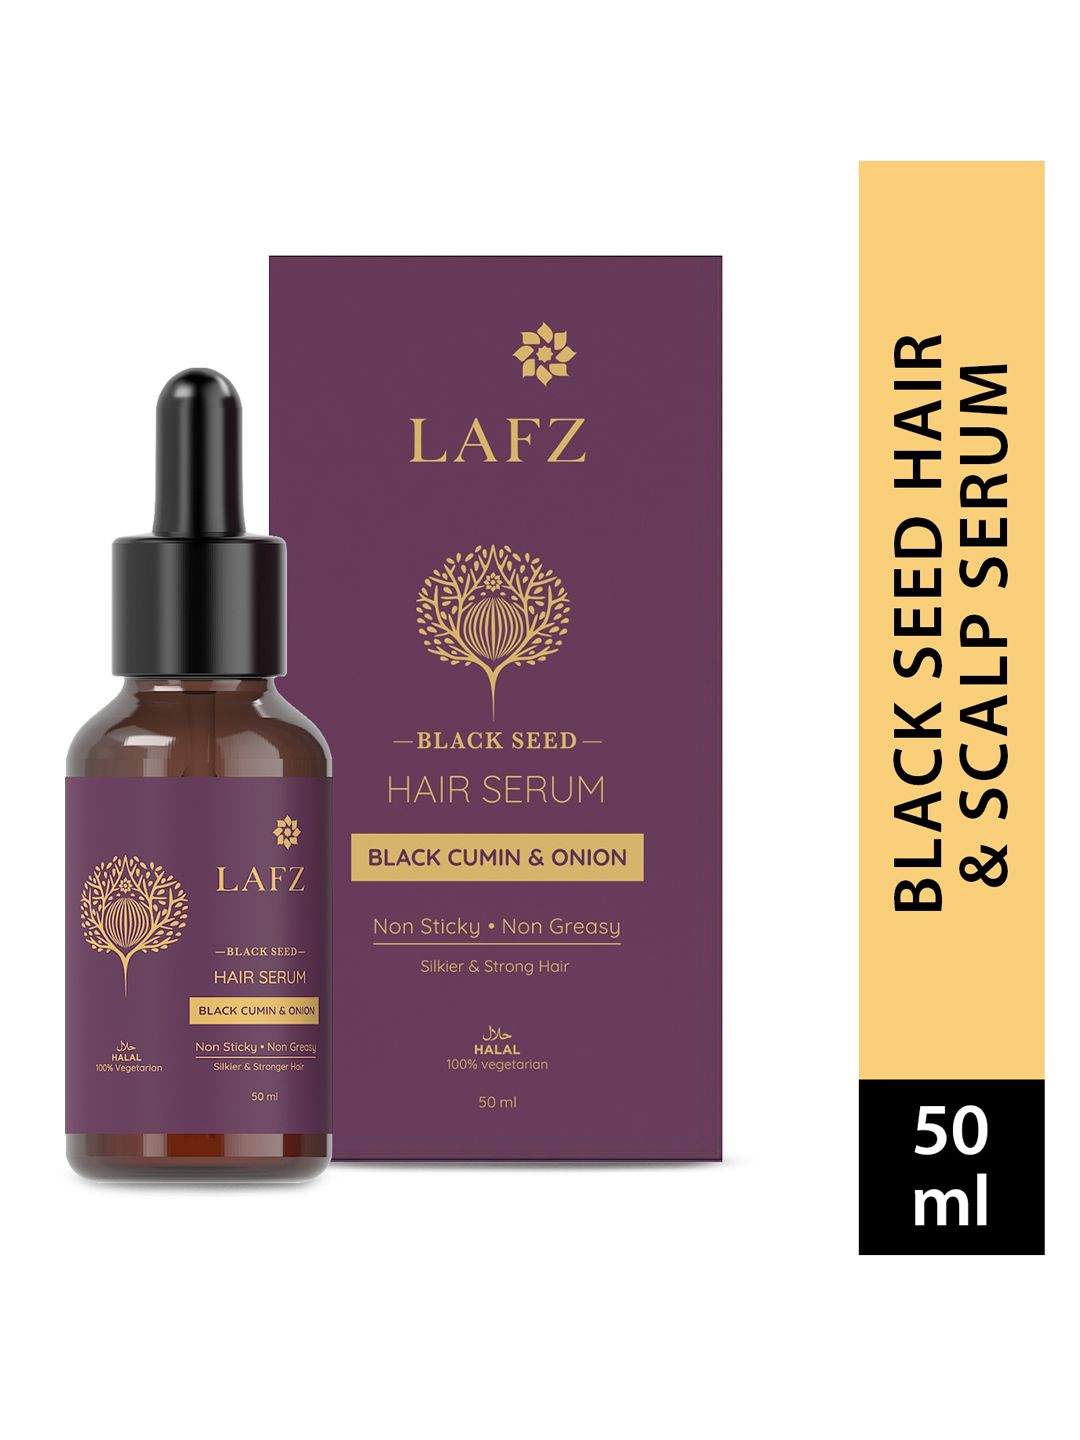 LAFZ Black Cumin & Onion Hair Serum - 50 ml Price in India